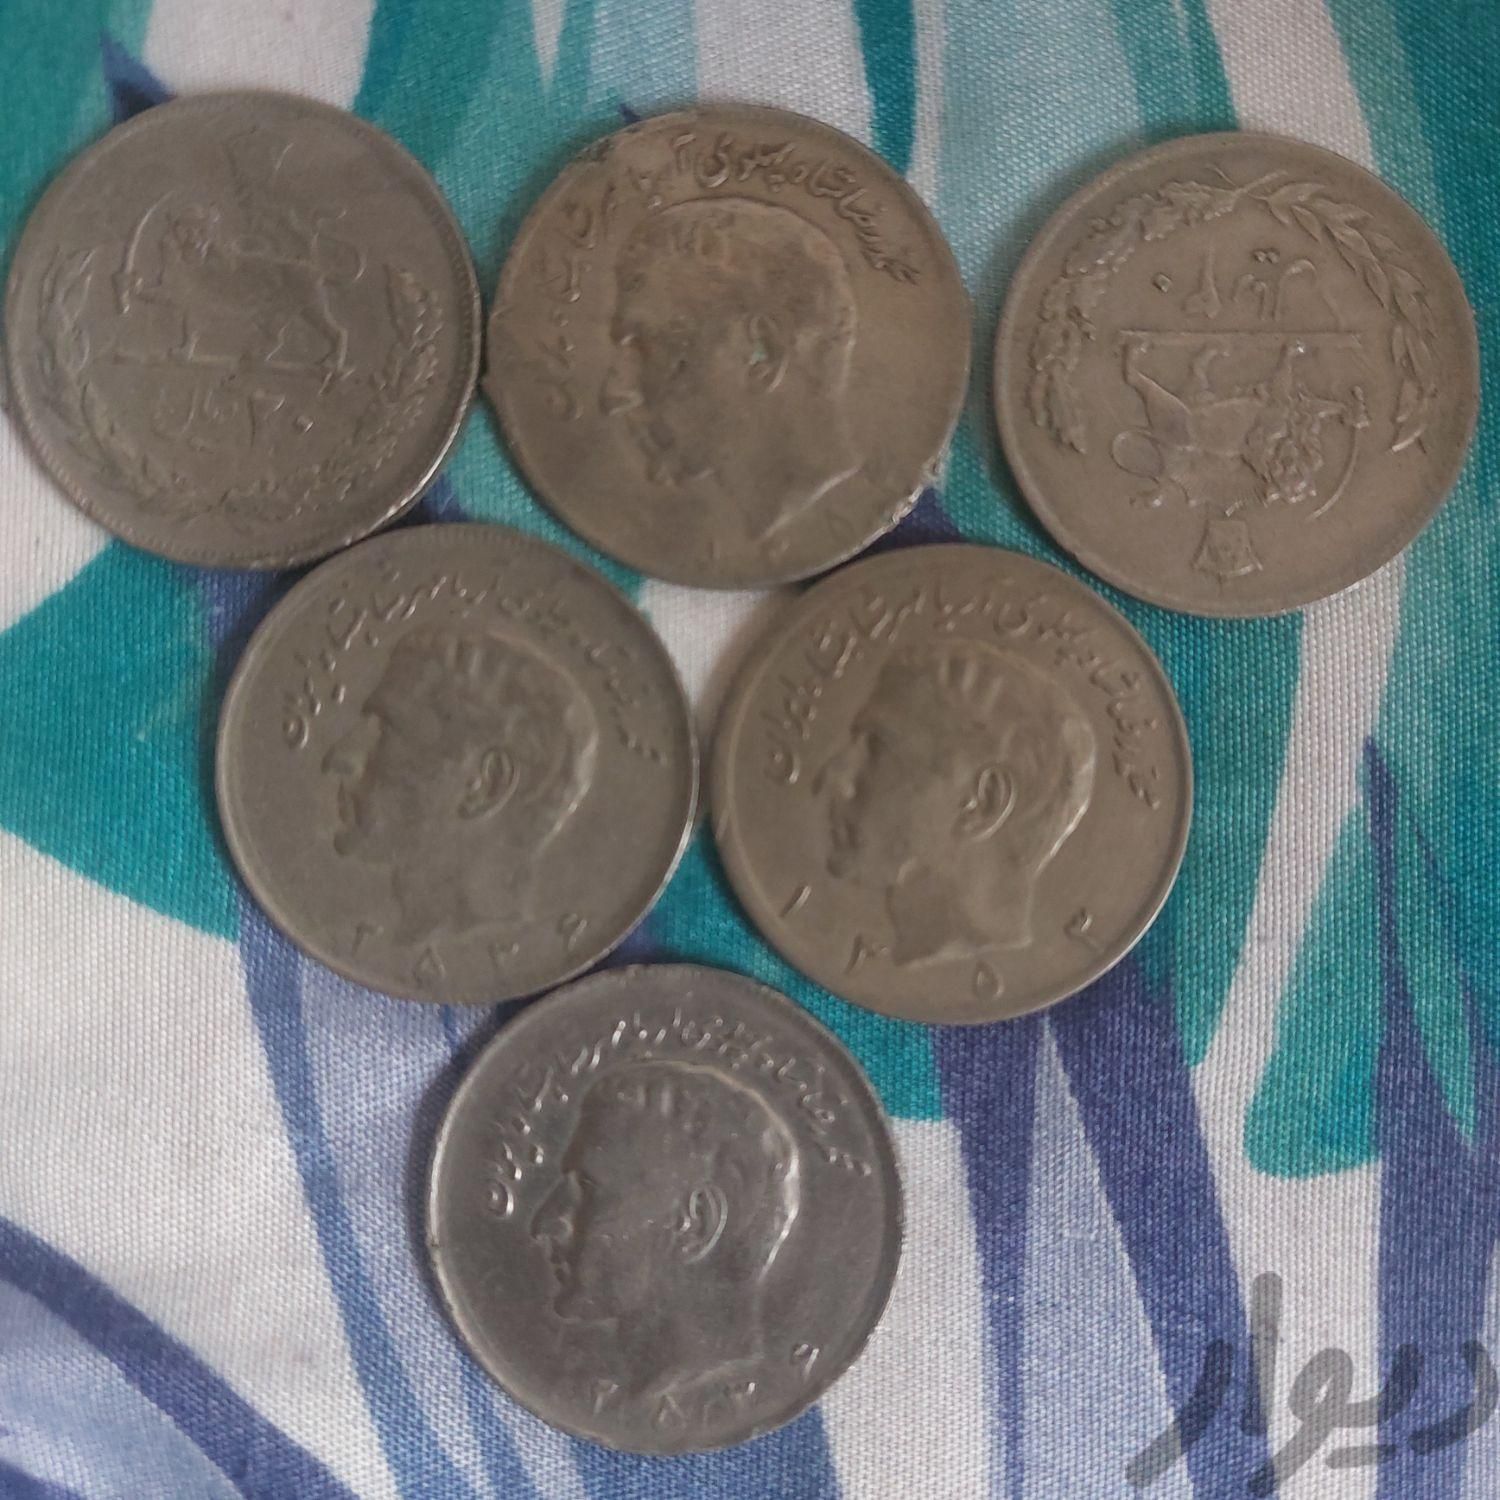 سکه ده ریالی وه بیست ریالی|سکه، تمبر و اسکناس|آمل, |دیوار